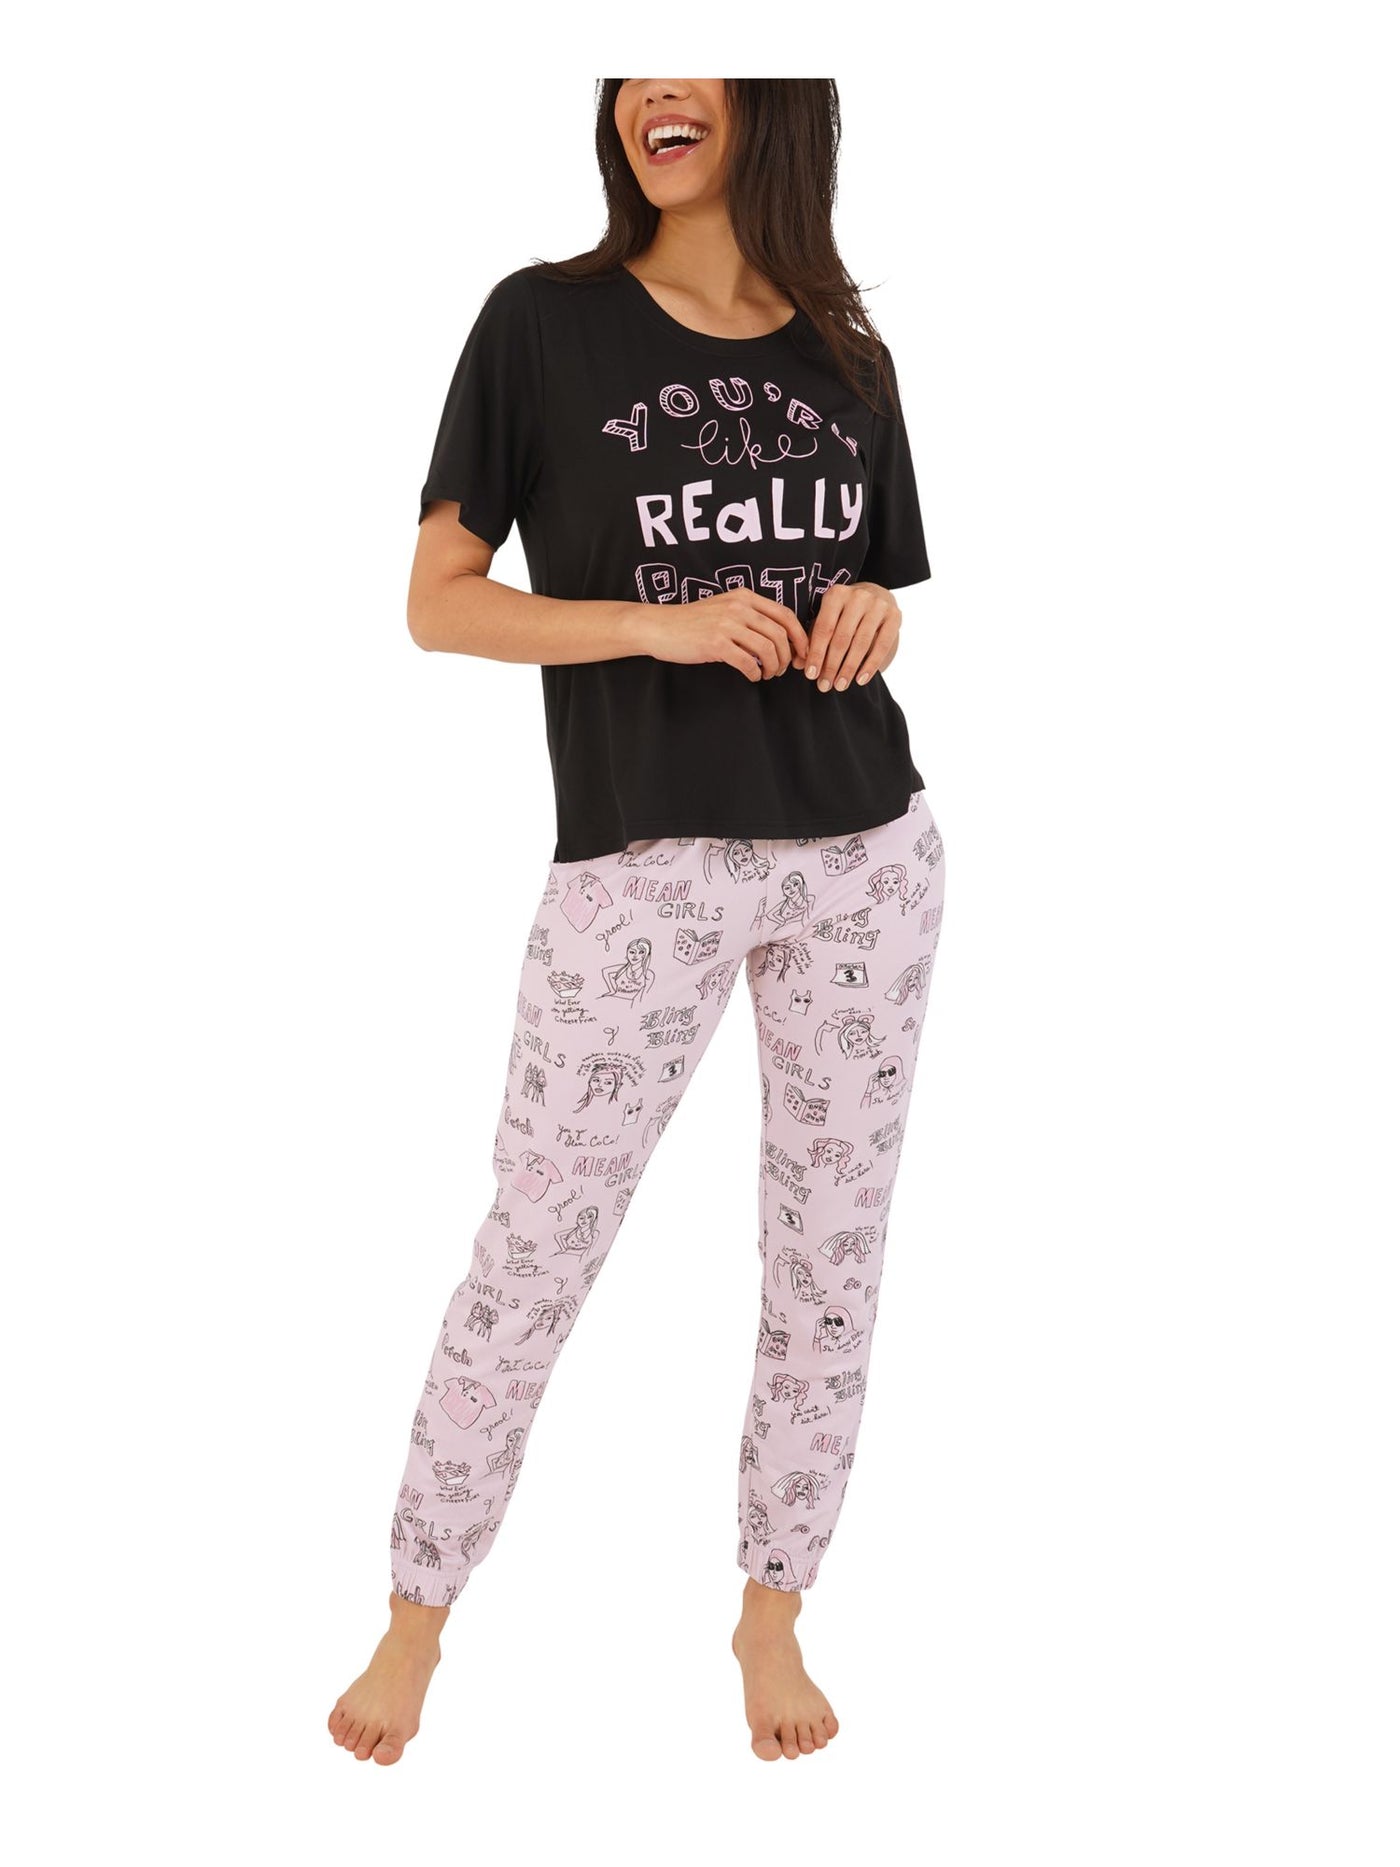 RETROSPECTIVE CO. Womens Pink Graphic Elastic Band Short Sleeve T-Shirt Top Cuffed Pants Pajamas M